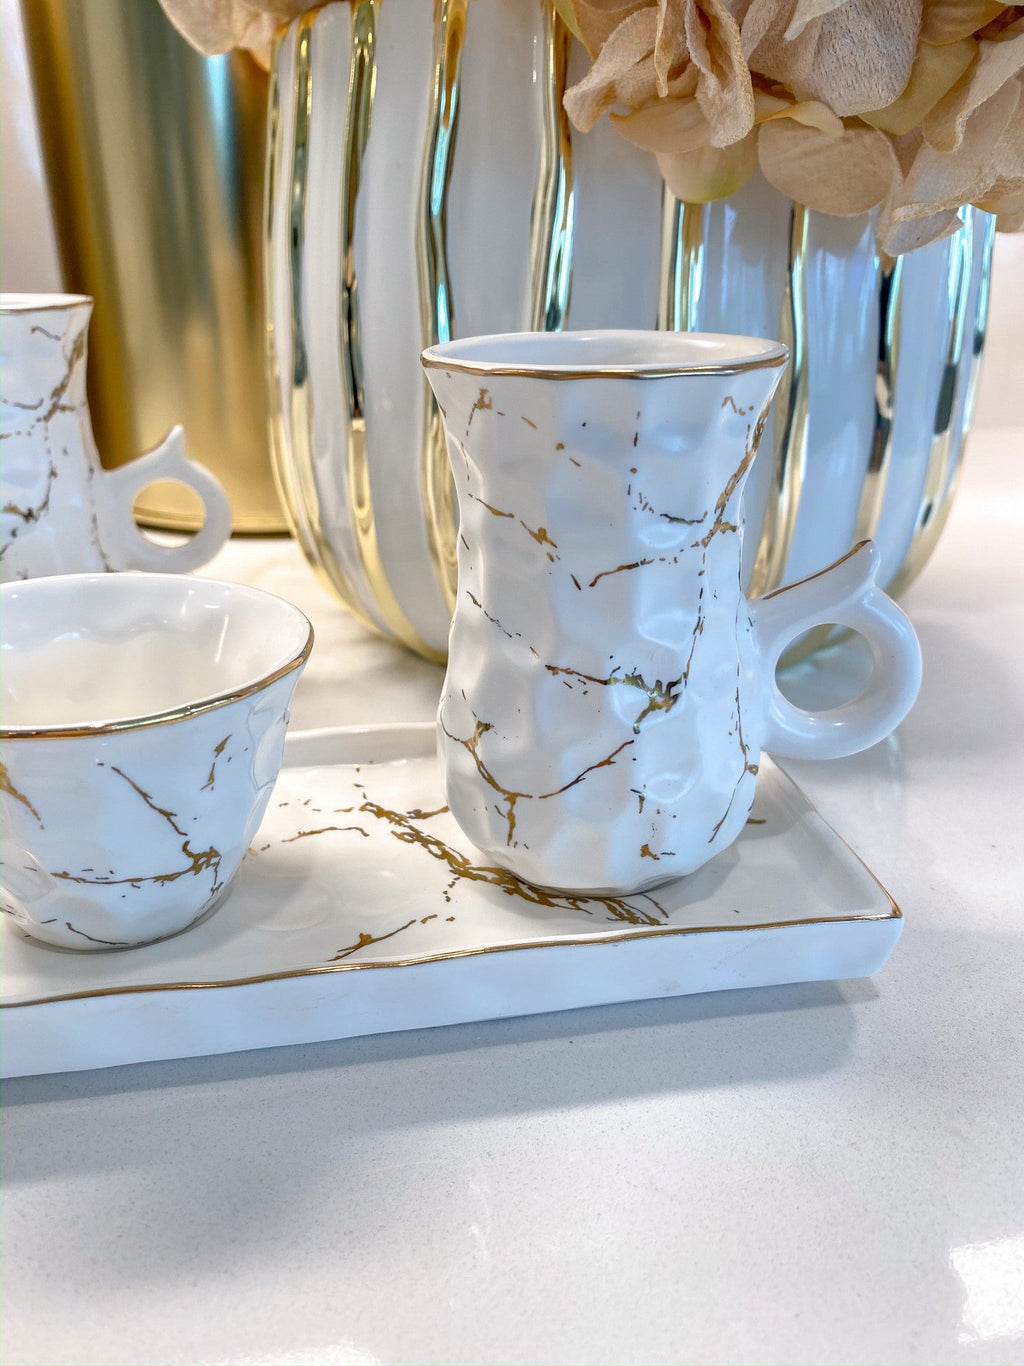 Porcelain Turkish Coffee Set (Marble Wooden Box)